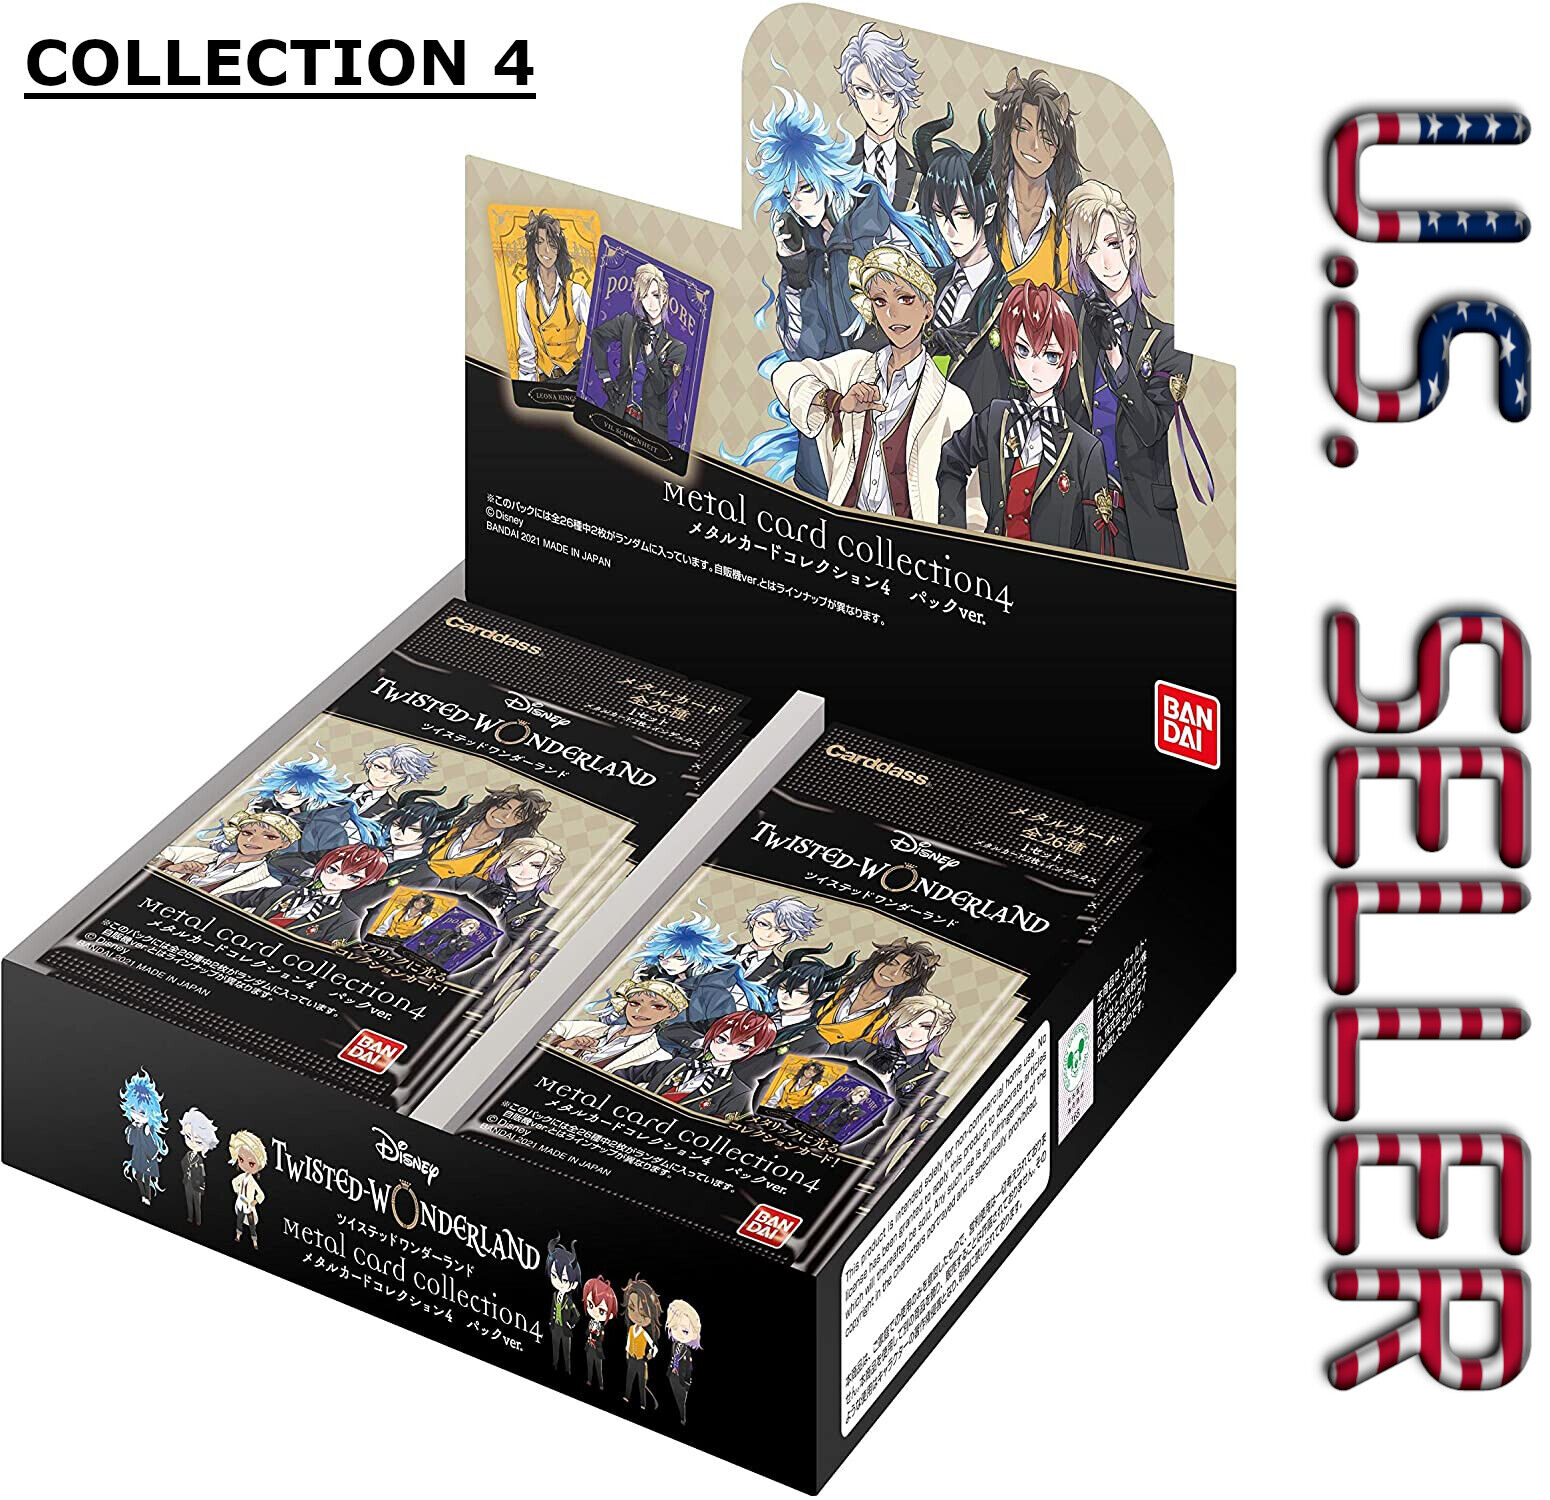 Bandai Disney Twisted Wonderland Metal Card Collection 4 Box Japan US SELLER